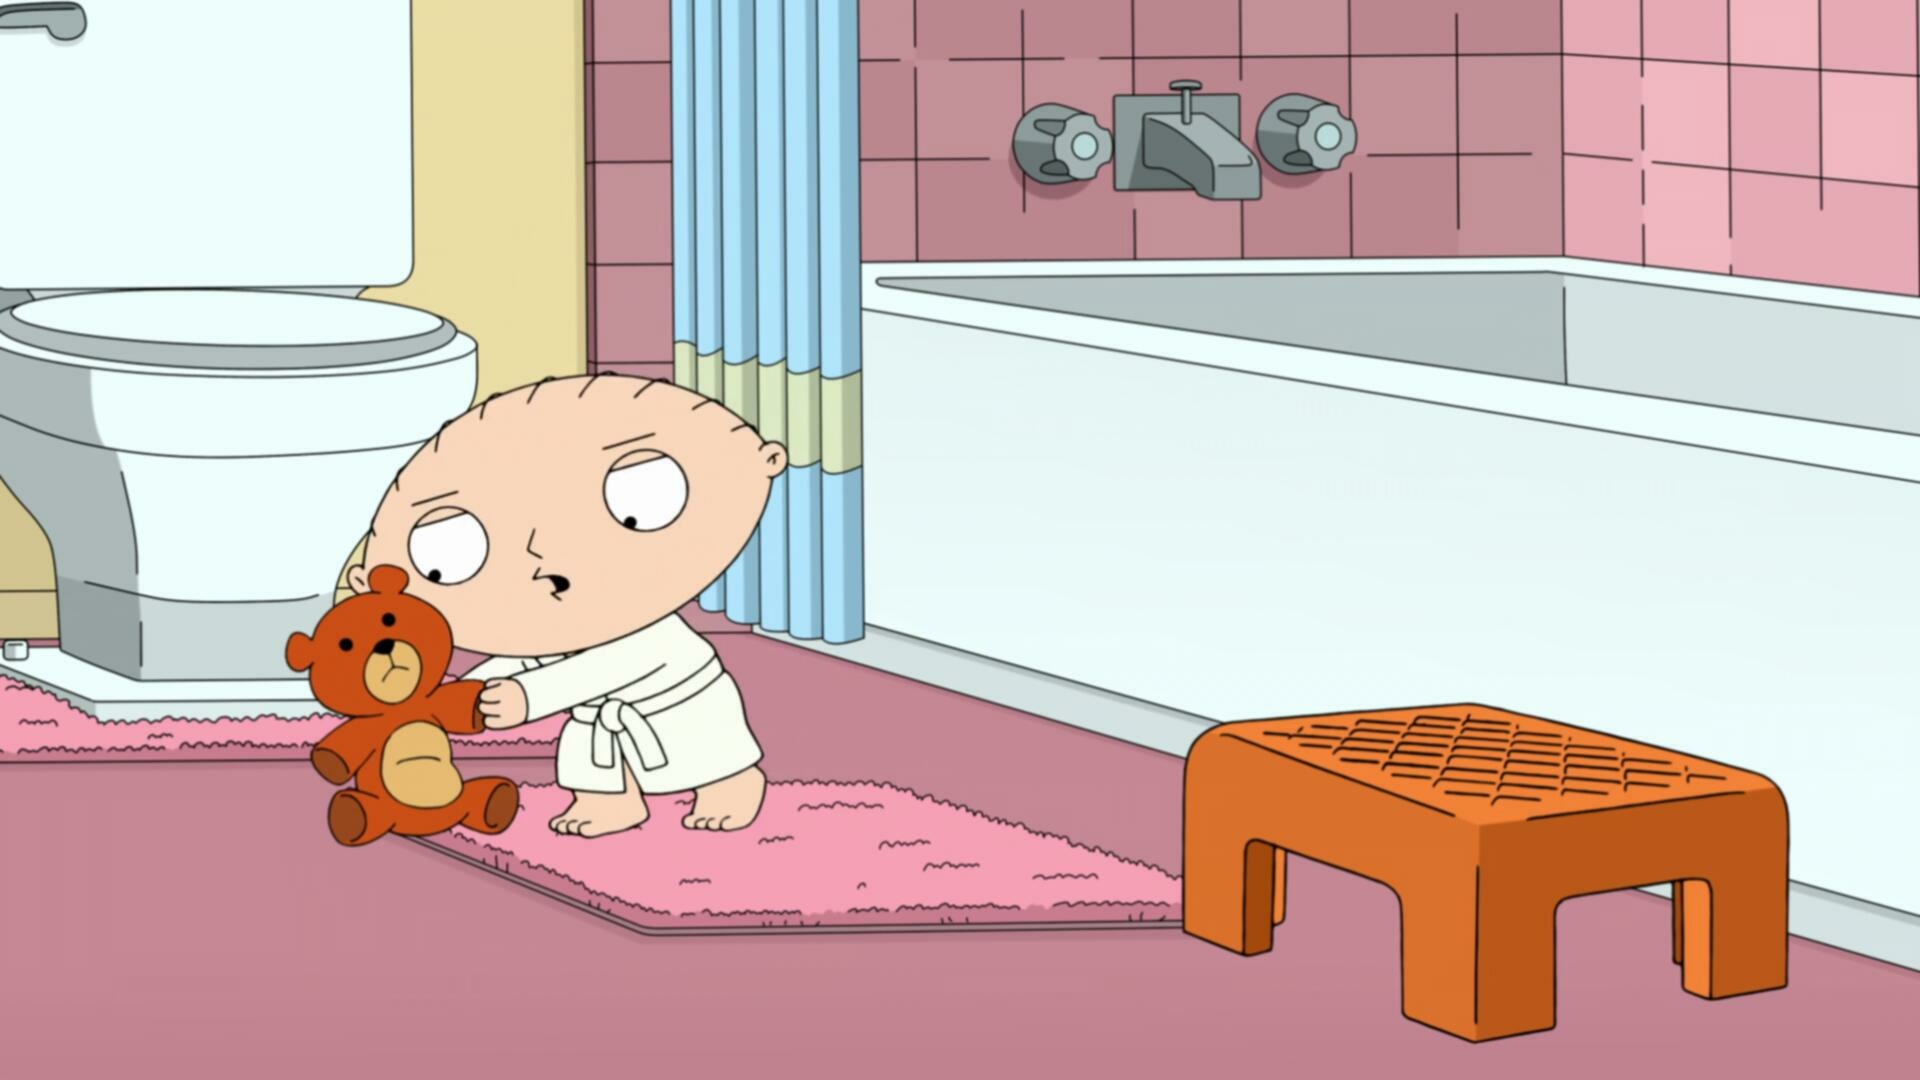 Family Guy S22E04 Old World Harm 1080p HULU WEB DL DDP5 1 H 264 NTb TGx